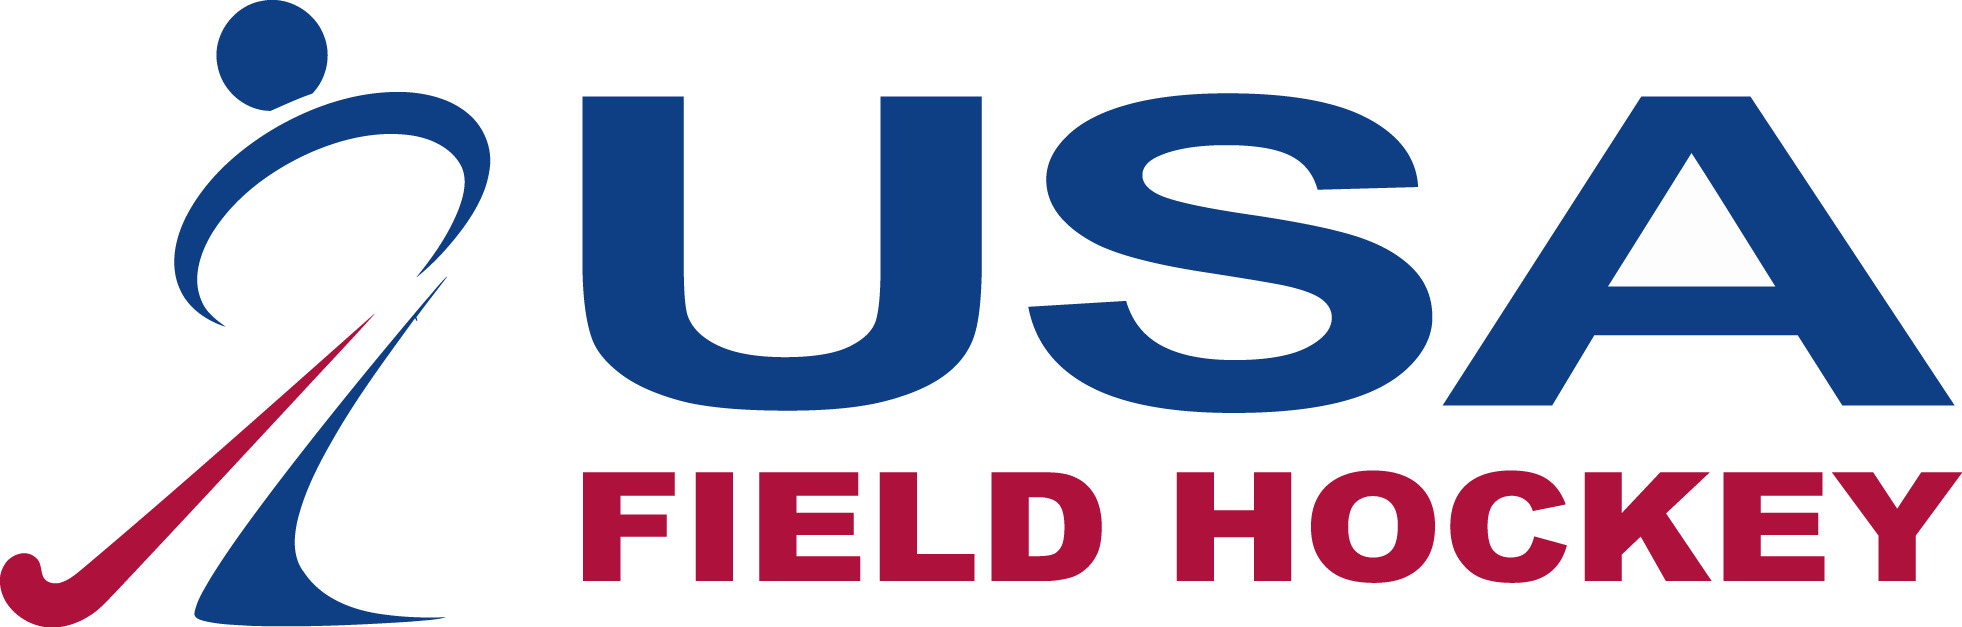 USA Field Hockey Logo png icons